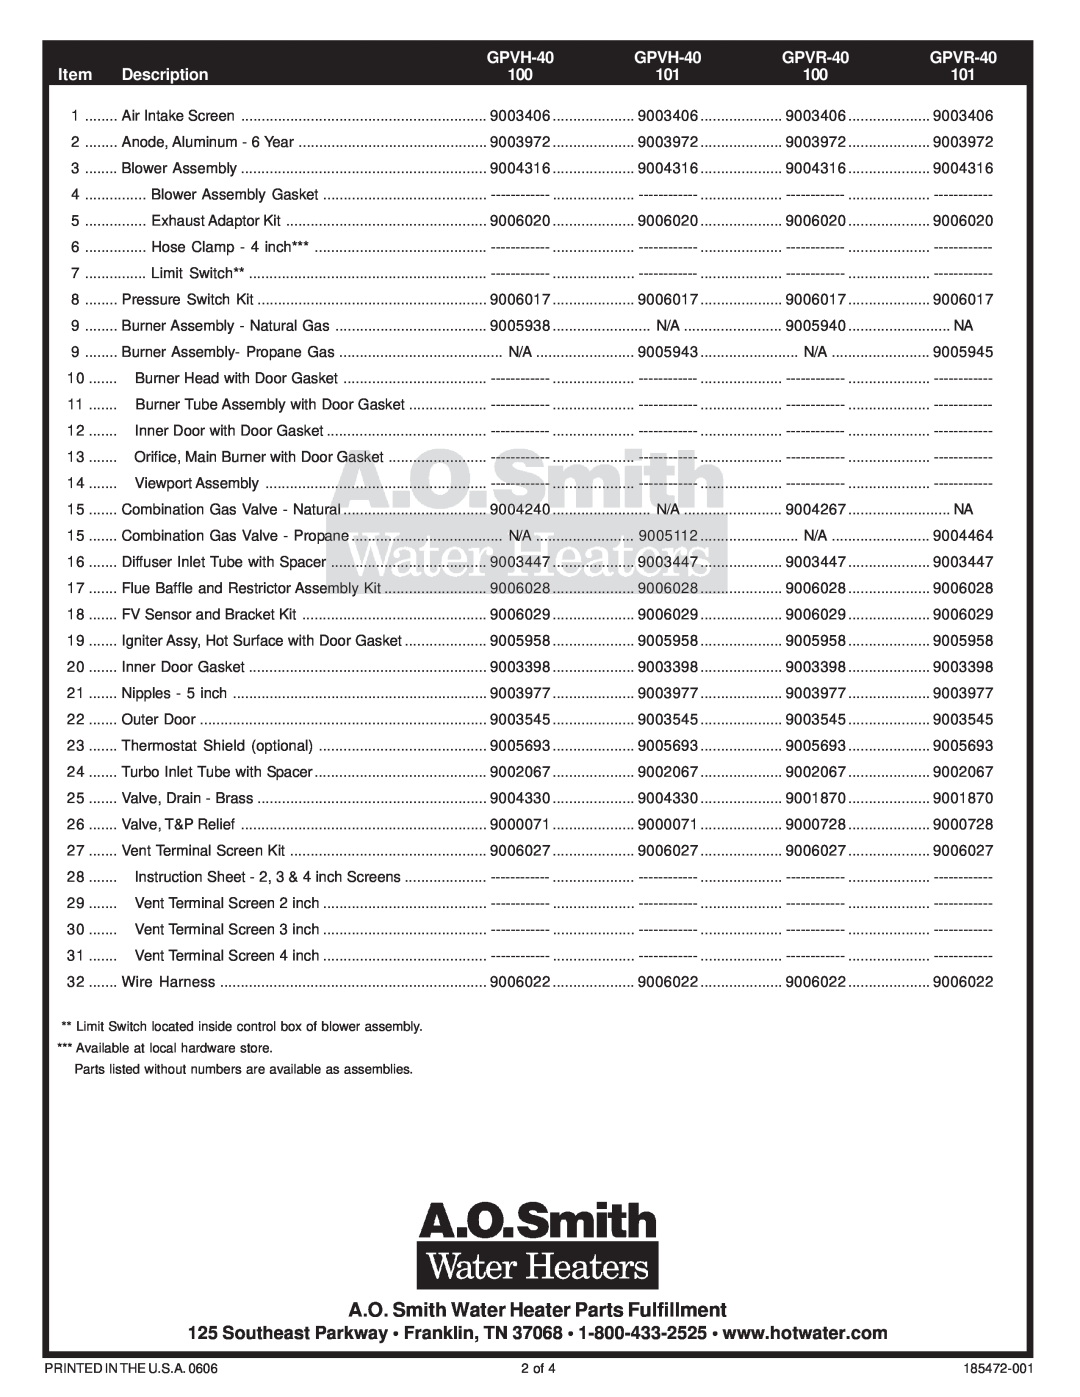 A.O. Smith GPVR 40, GPVH 40 manual A.O. Smith Water Heater Parts Fulfillment, Description, GPVH-40, GPVR-40 